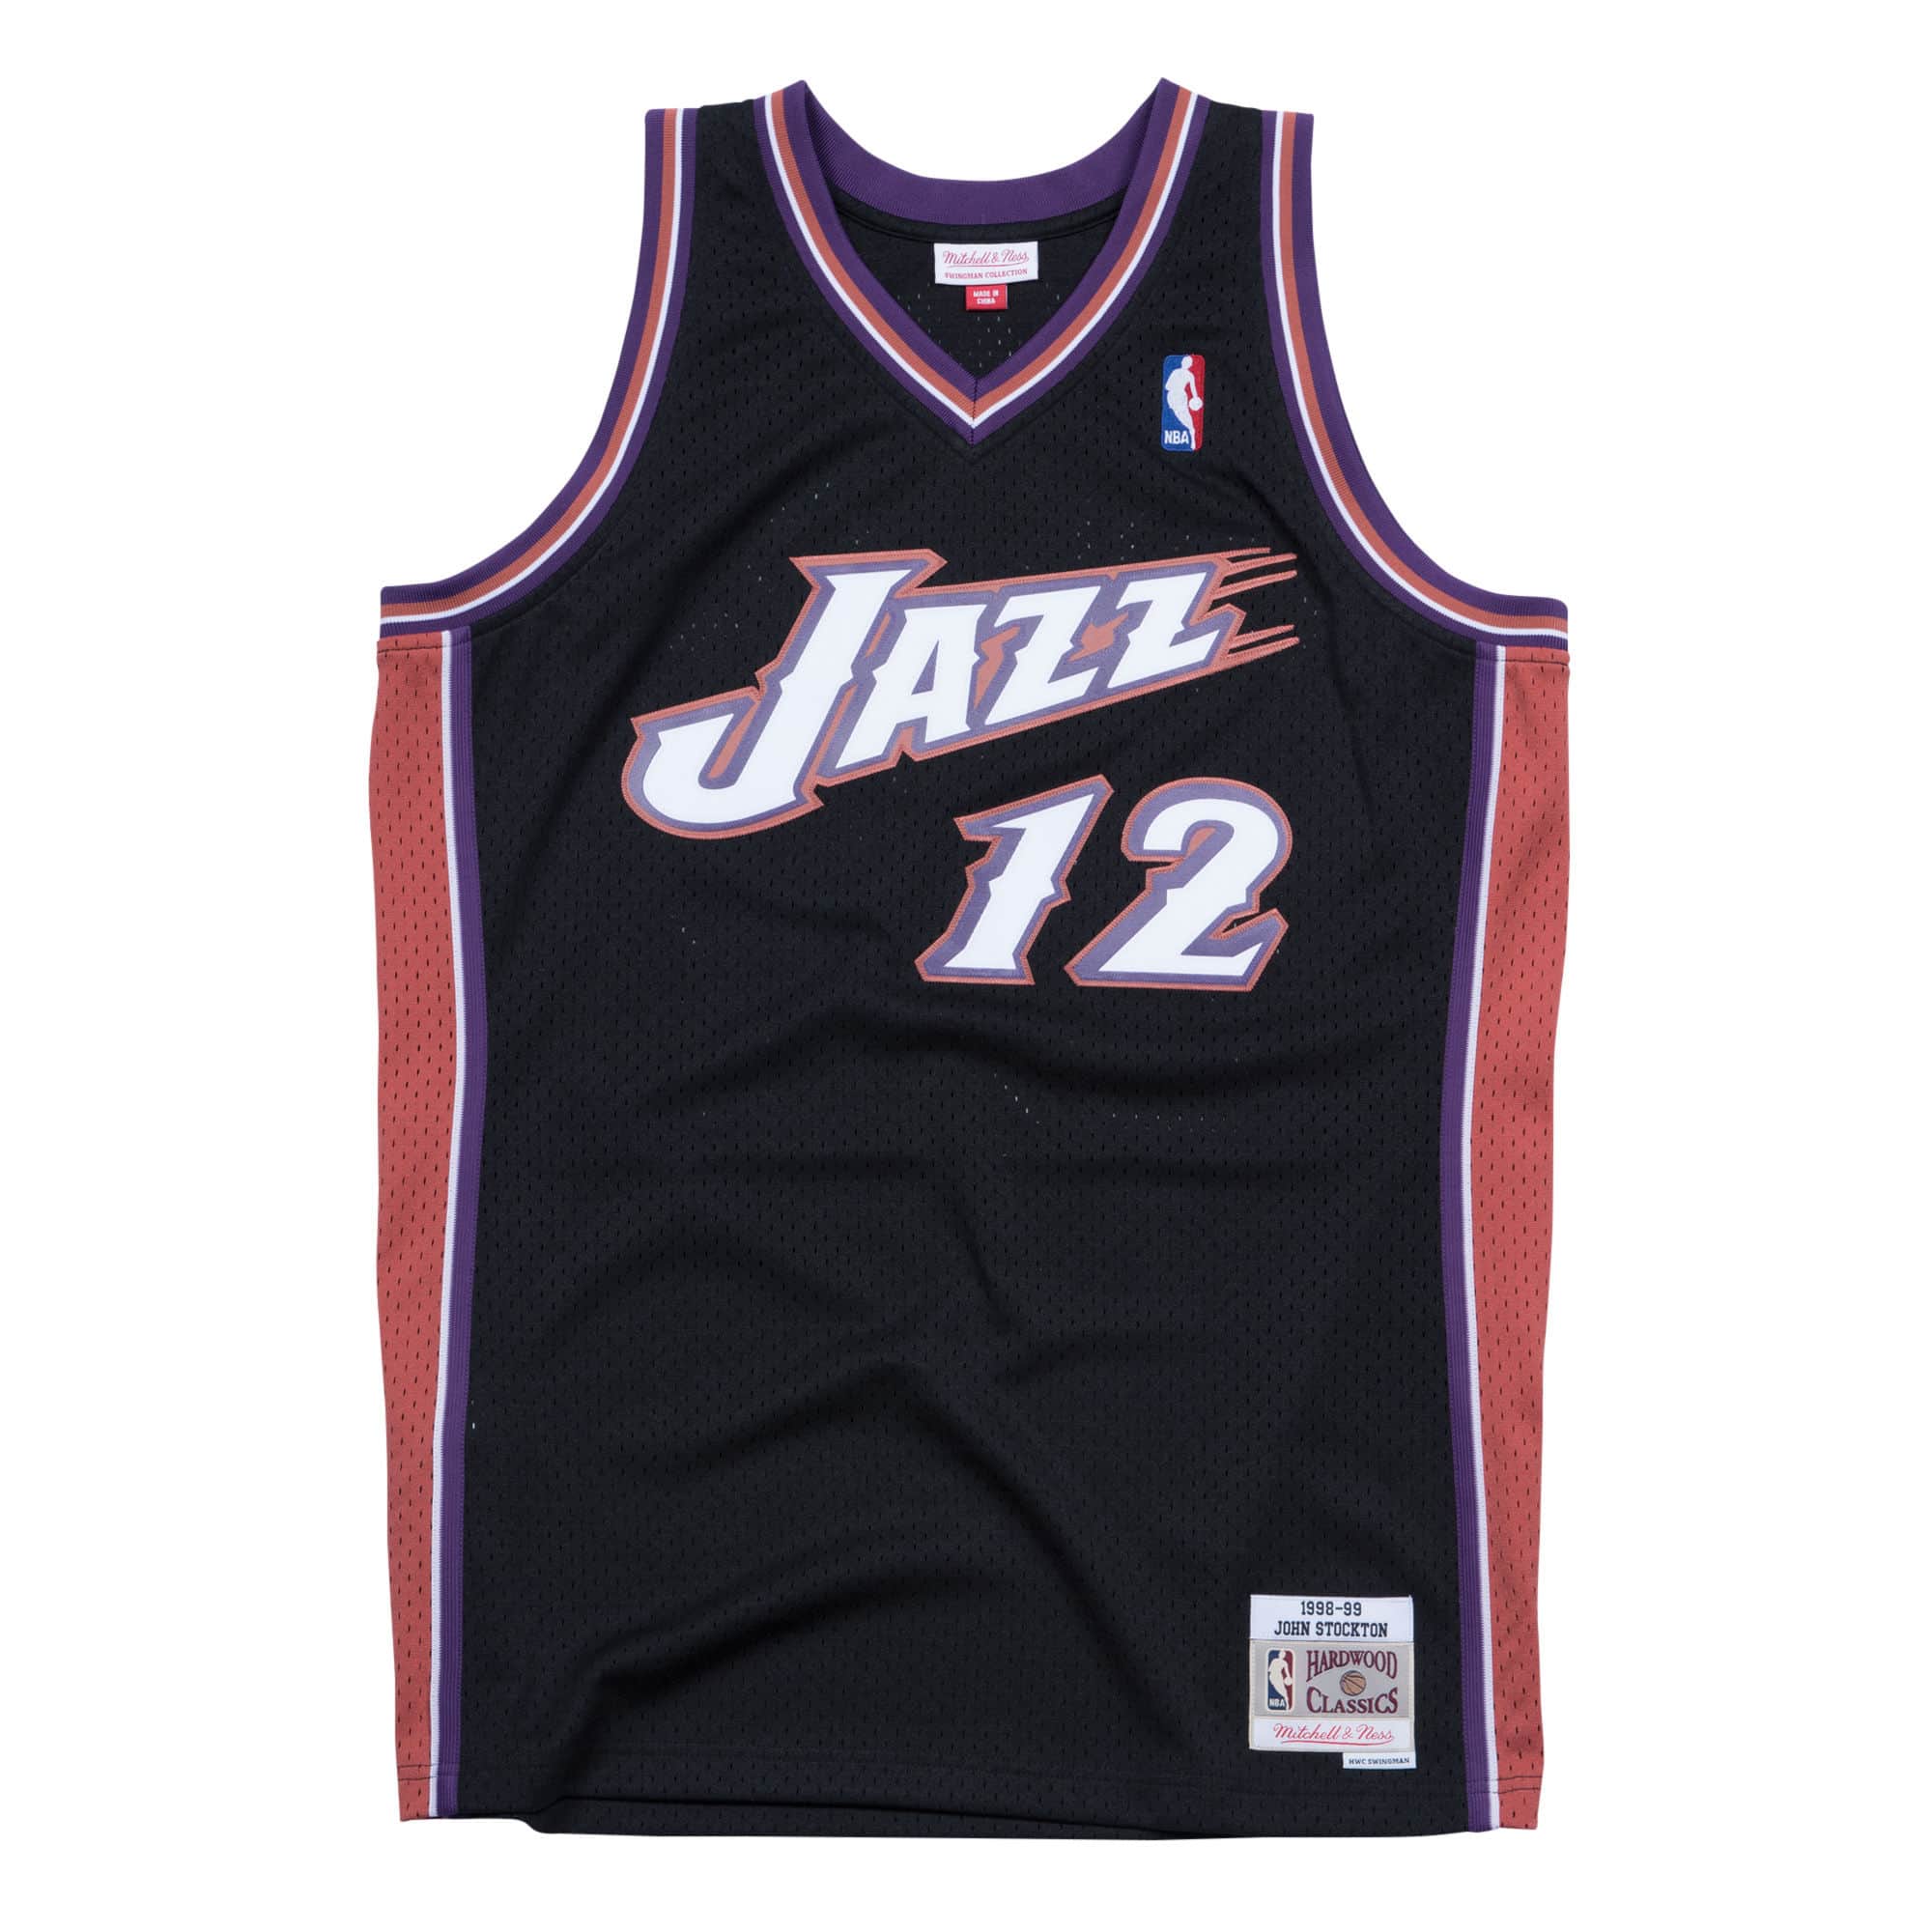 Utah Jazz Jerseys, Jazz Basketball Jerseys